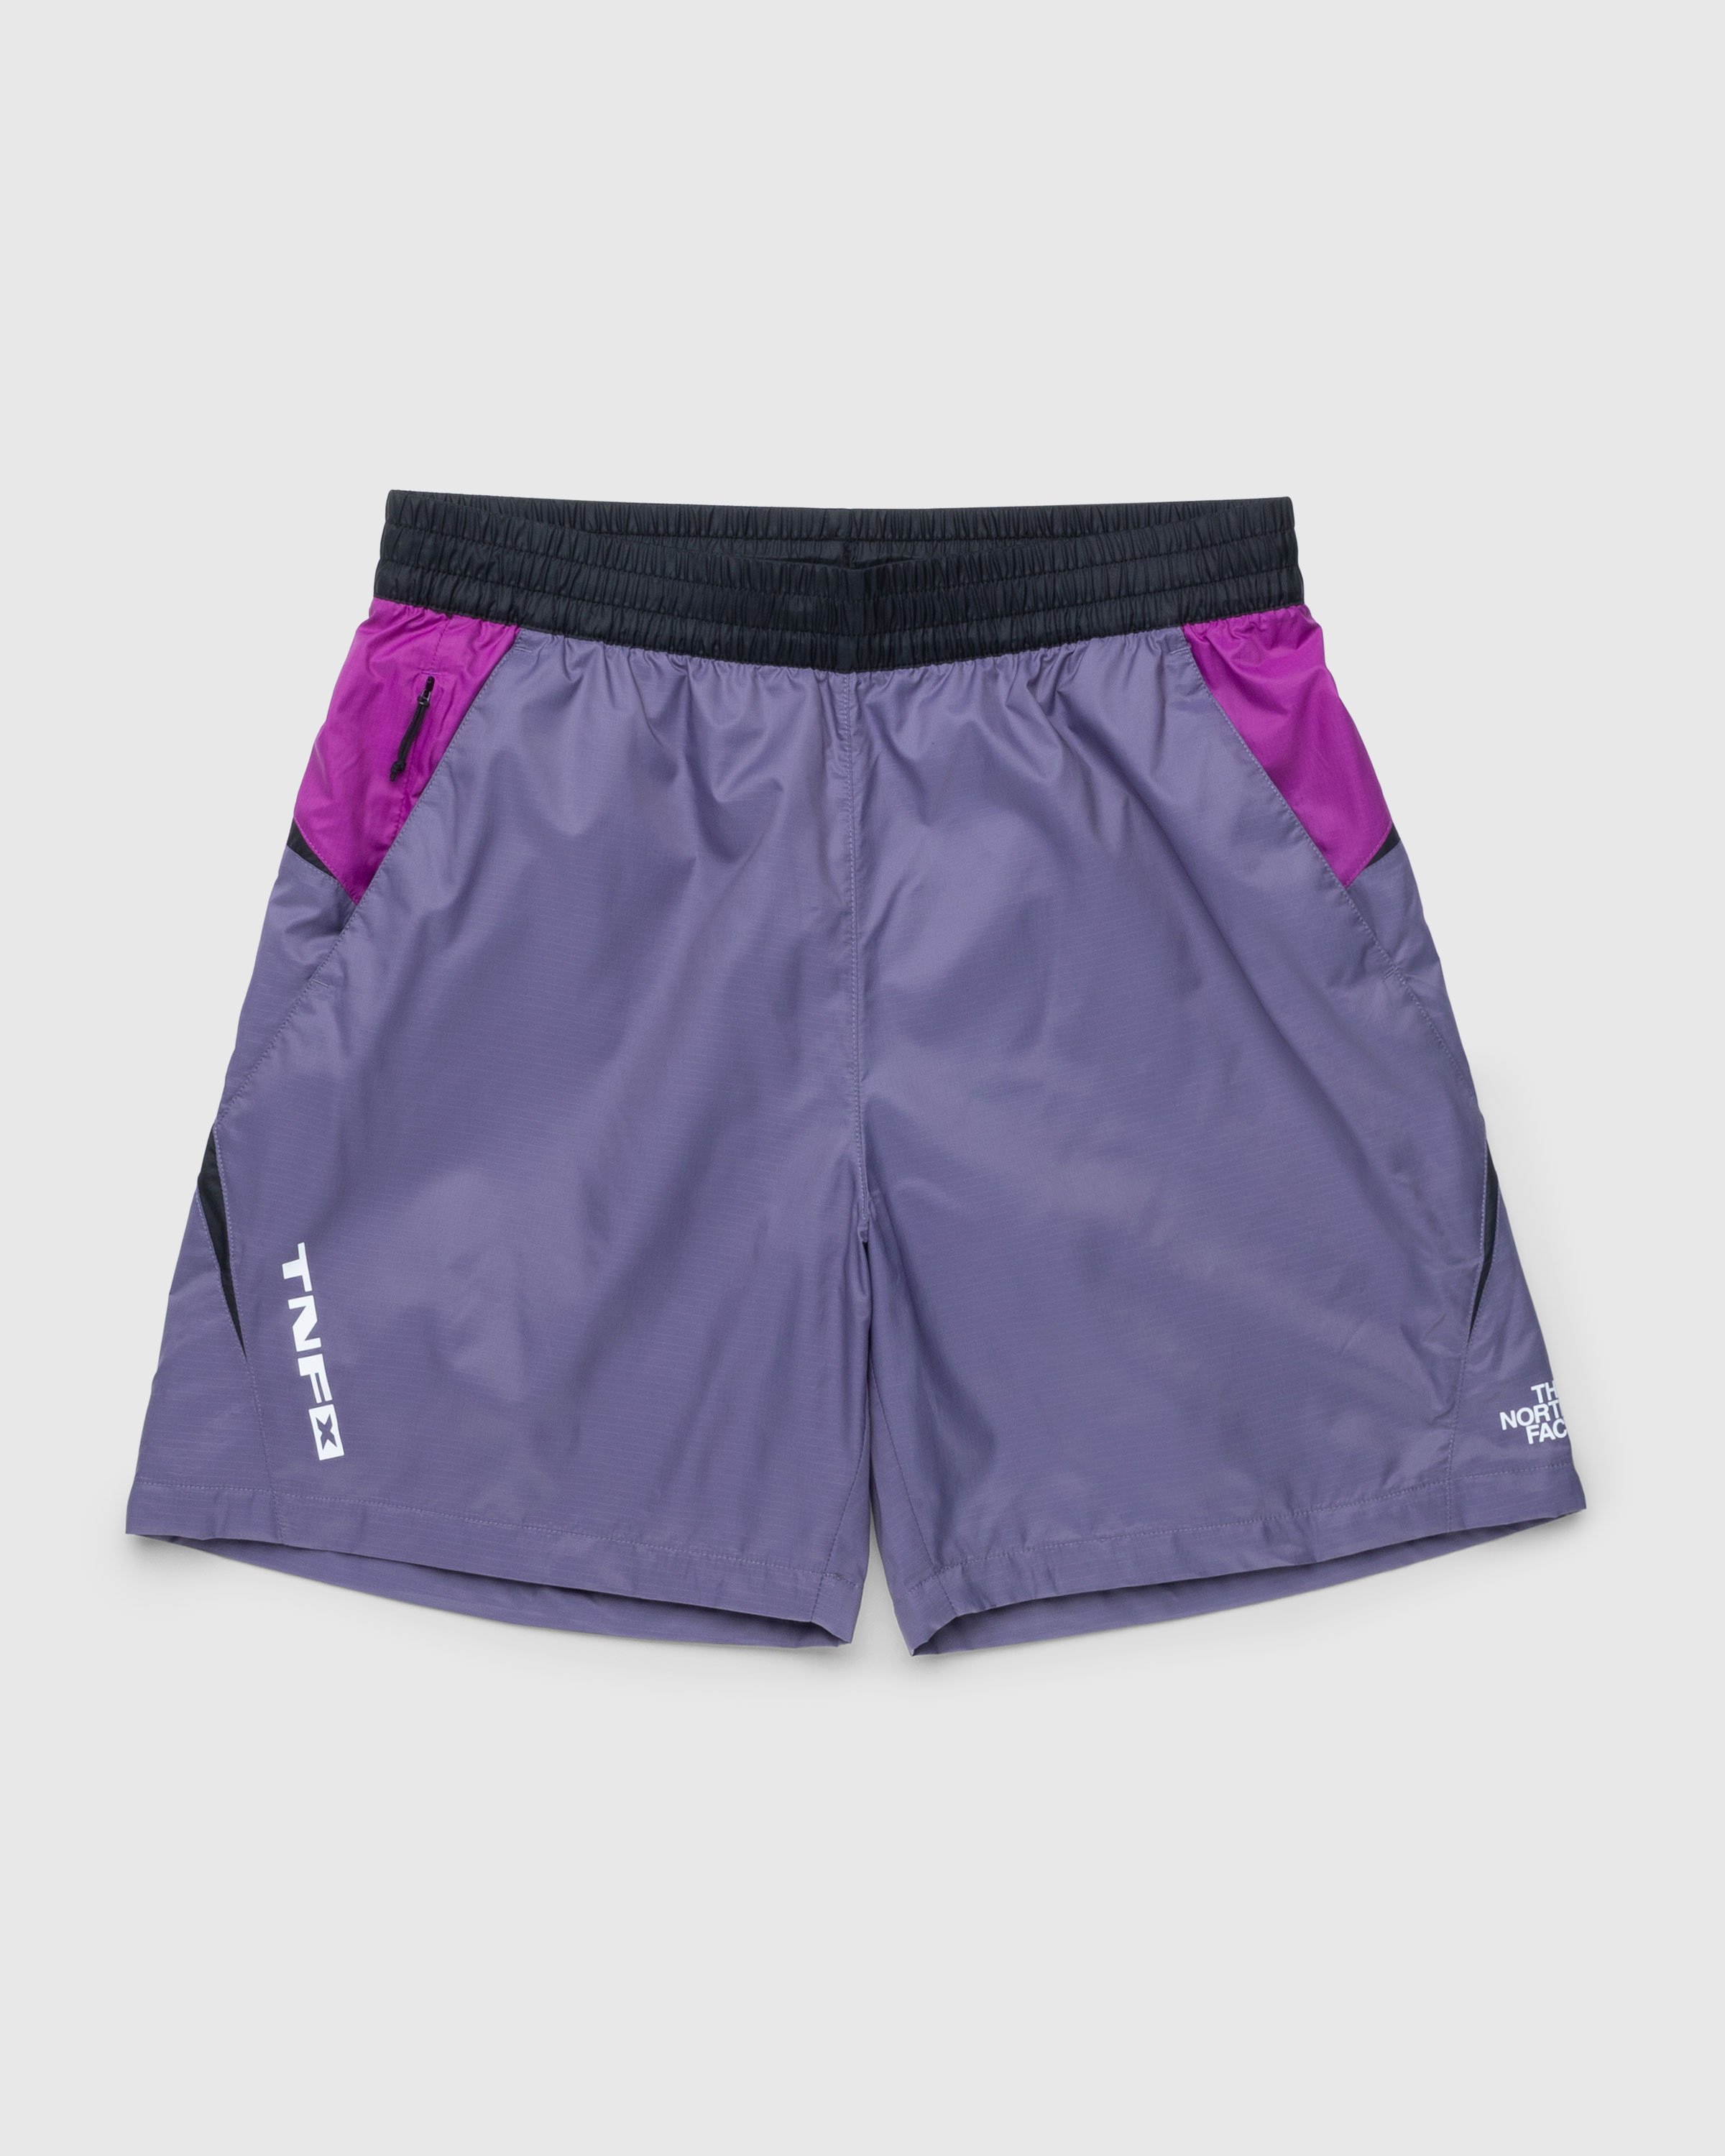 The North Face – TNF X Shorts Purple | Highsnobiety Shop